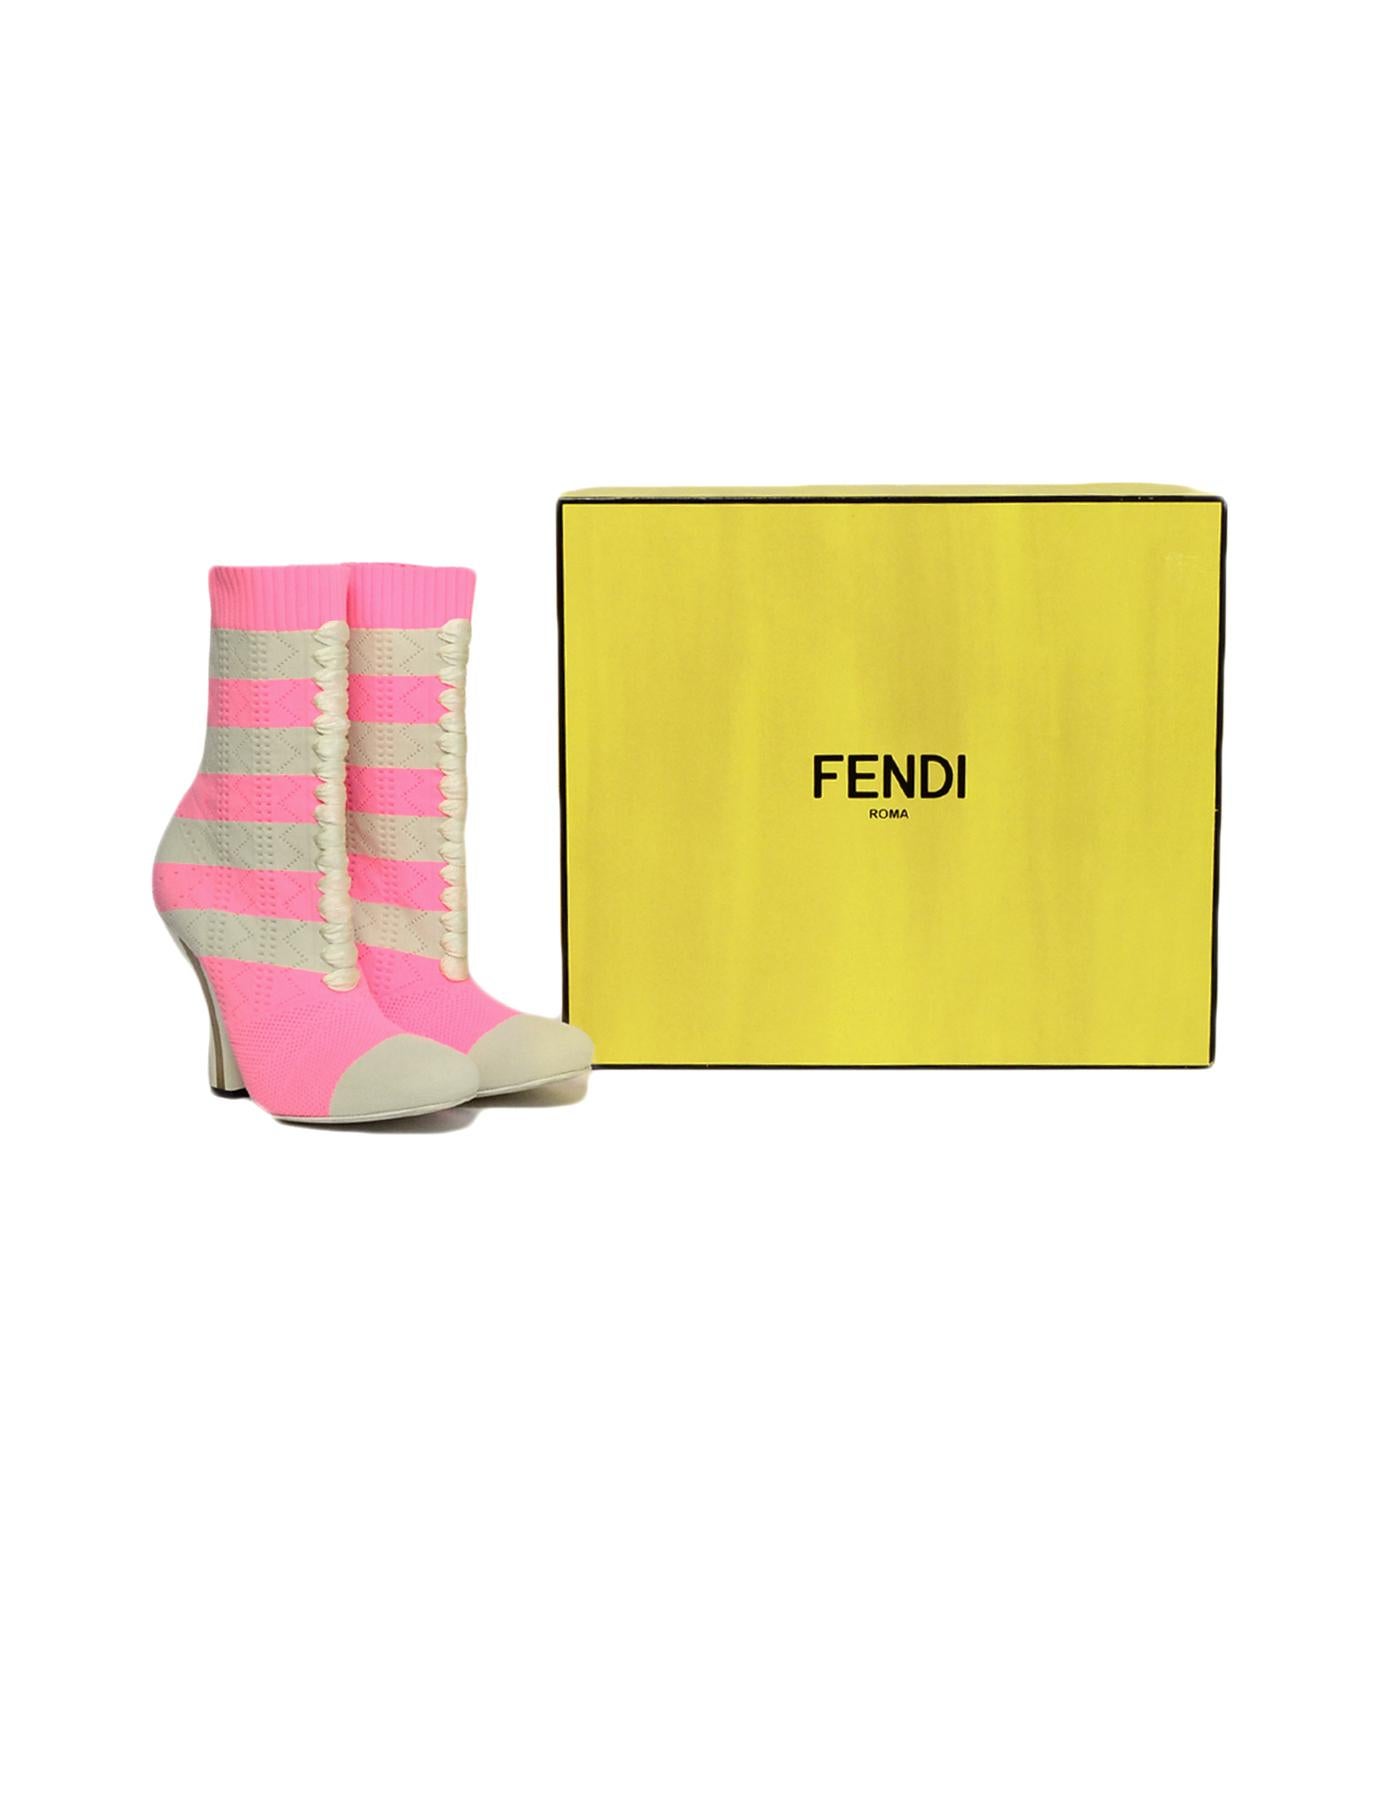 Fendi Pink/Beige Striped Rockoko 100 Knit Sock Boots sz 39 rt $950 